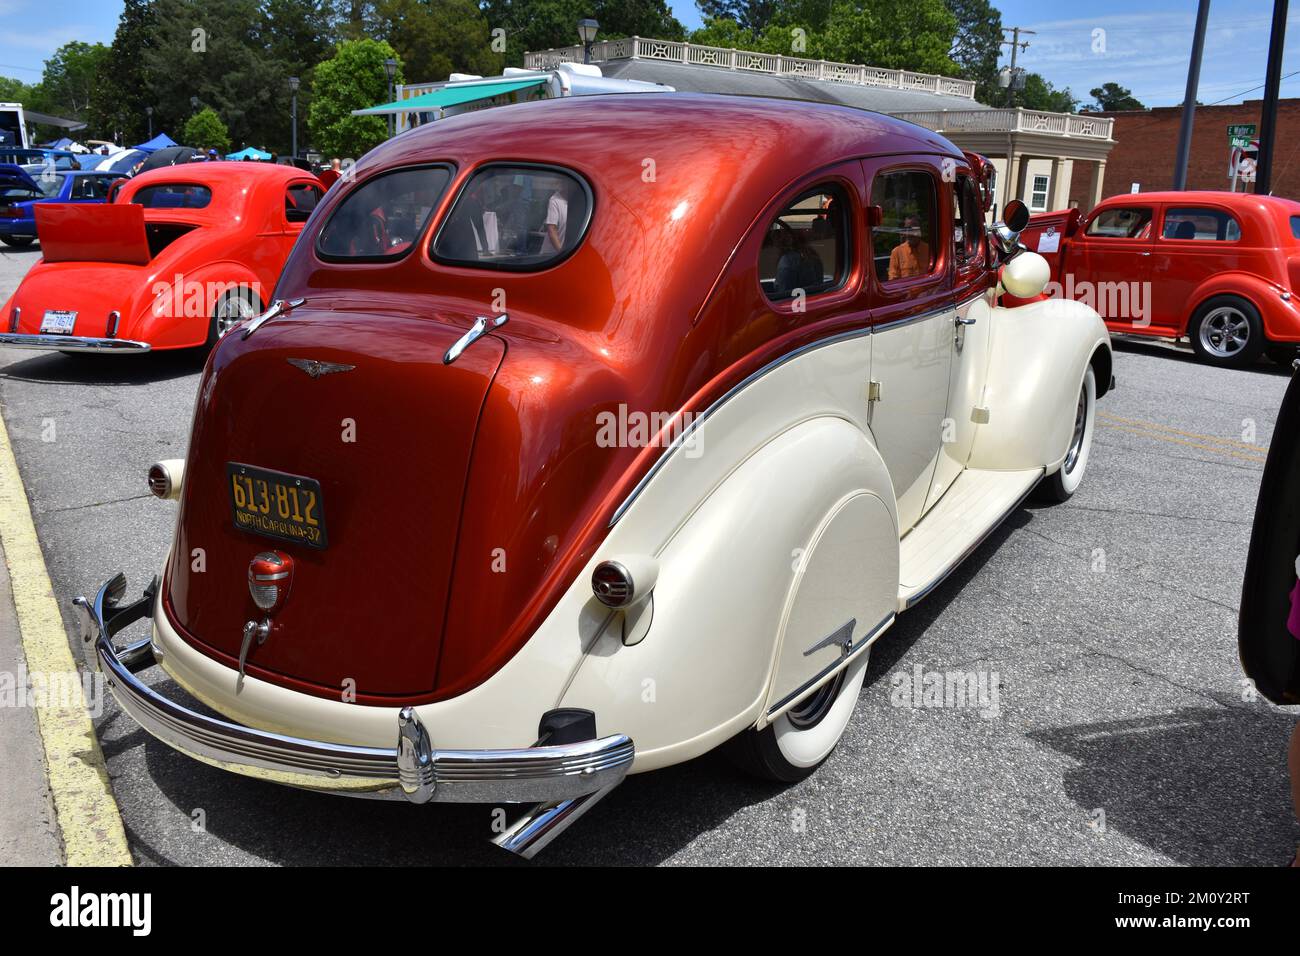 A 1937 Chrysler Royal on display at a Car Show. Stock Photo